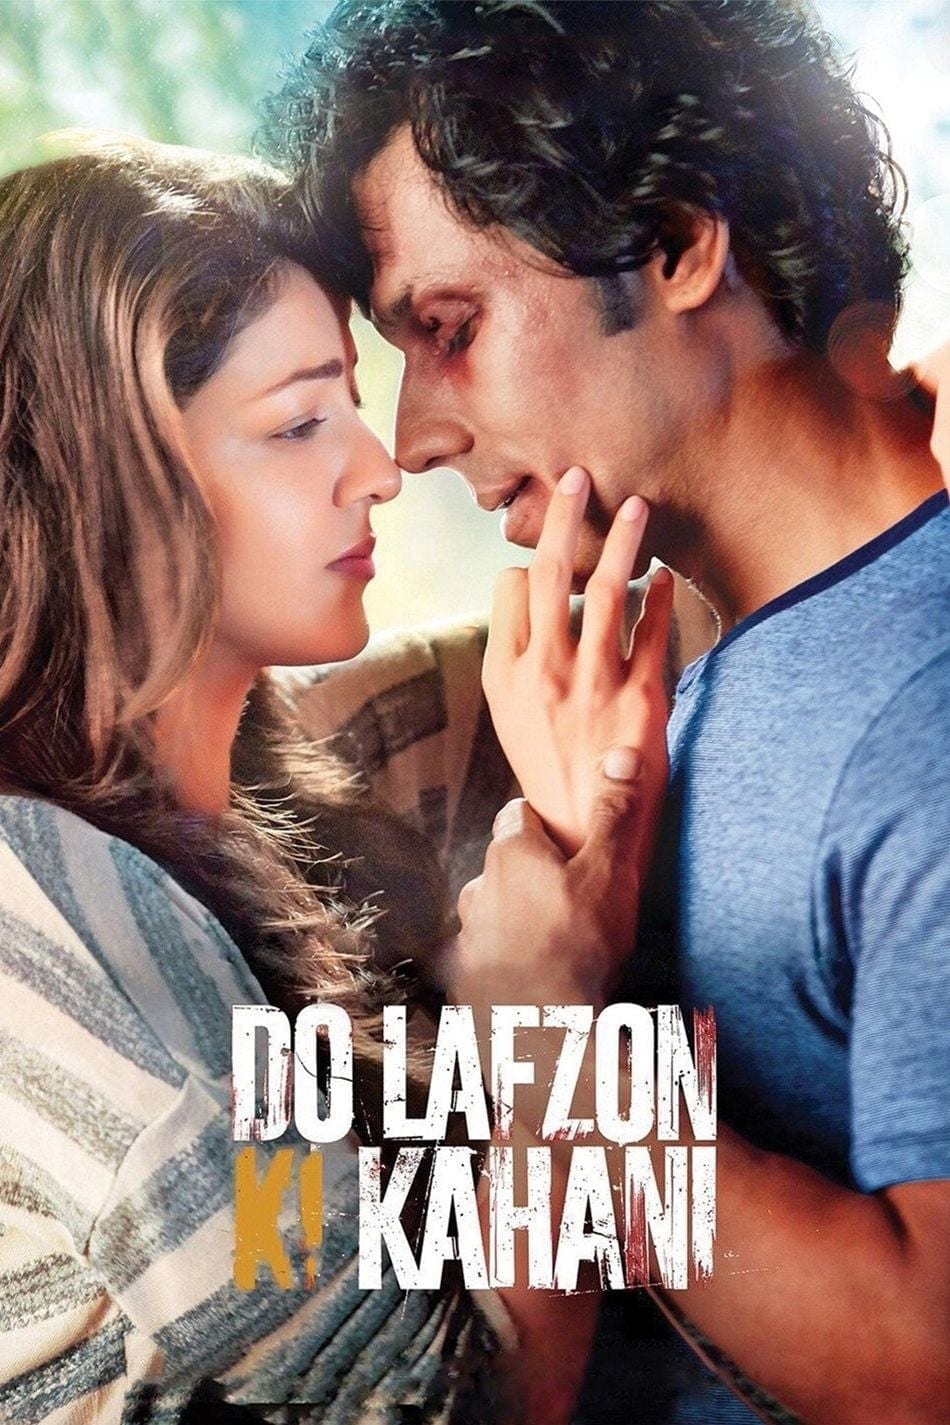 Poster for the movie "Do Lafzon Ki Kahani"